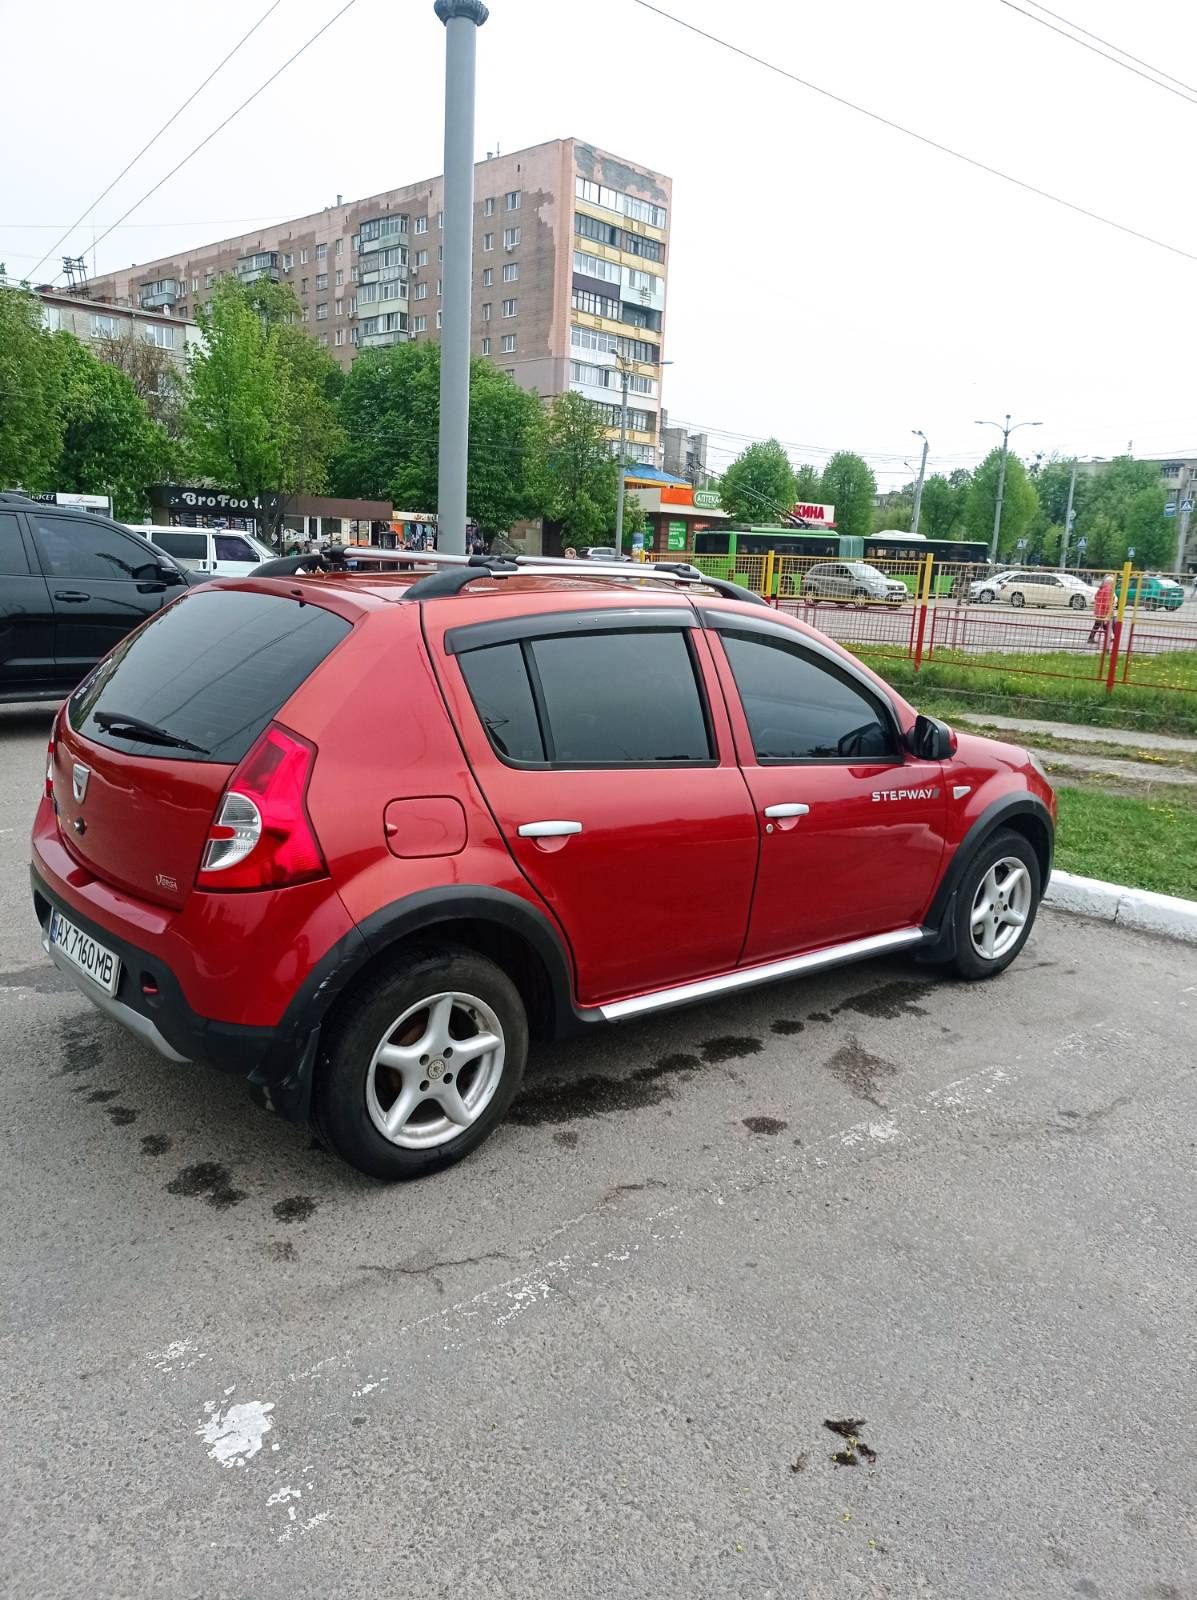 Dacia Сандеро СтепВей